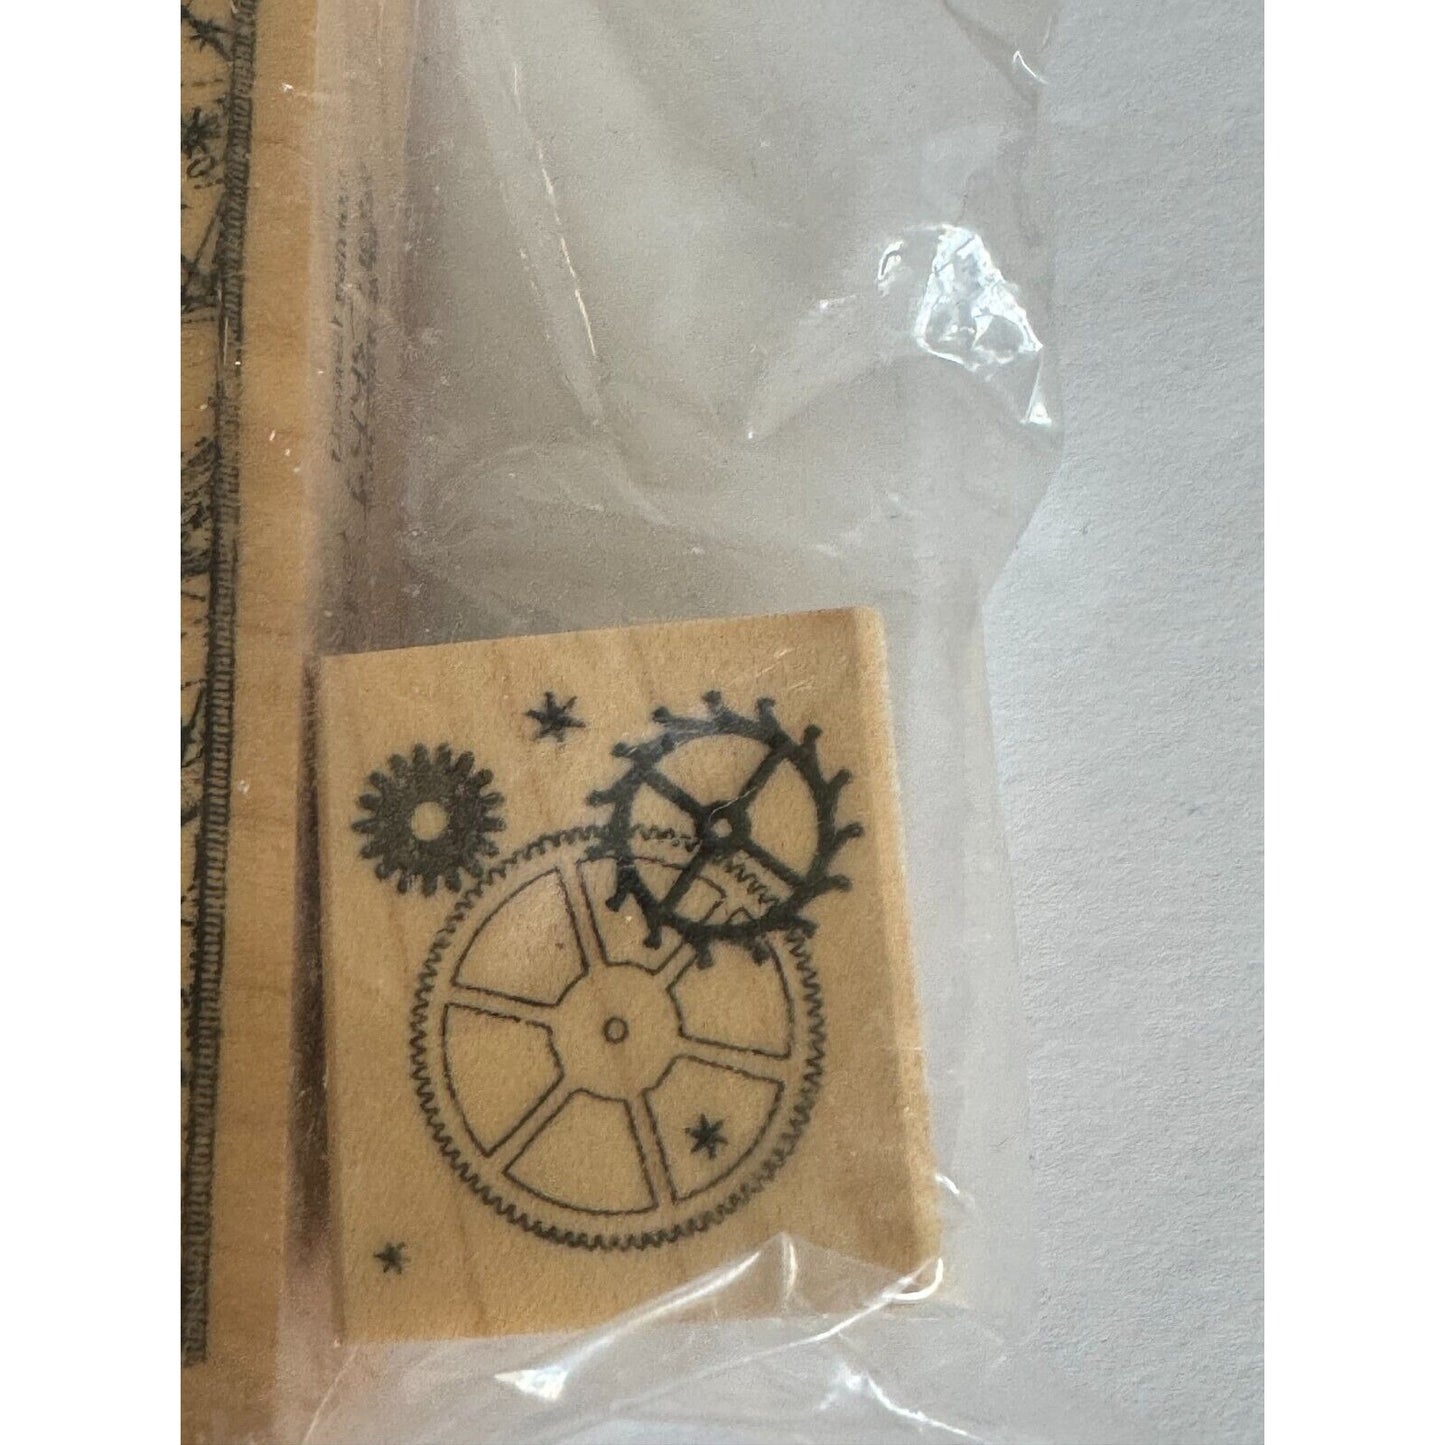 Club Scrap Rubber Stamp Limited Edition Horologiun Pendulum Steampunk Wheels